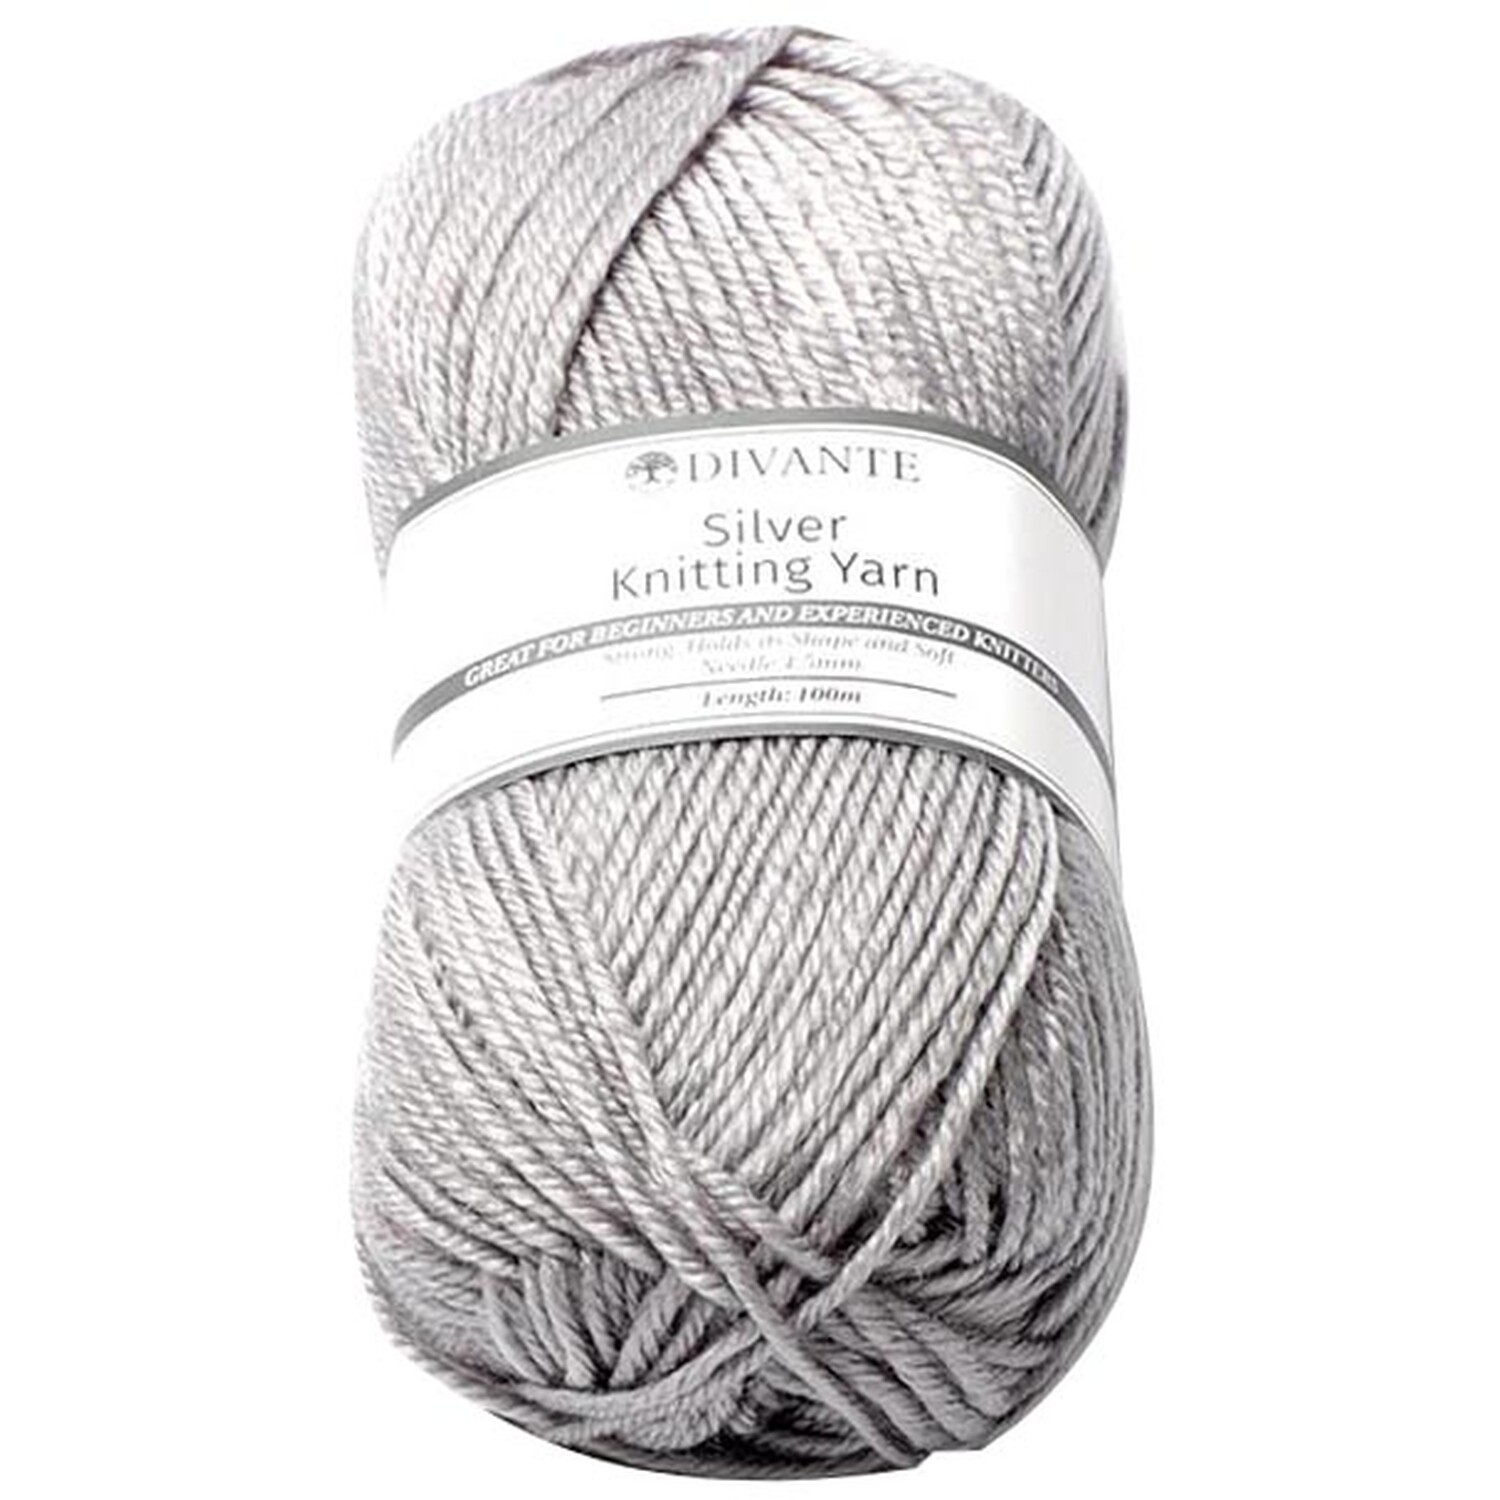 Divante Silver Knitting Yarn 50g Image